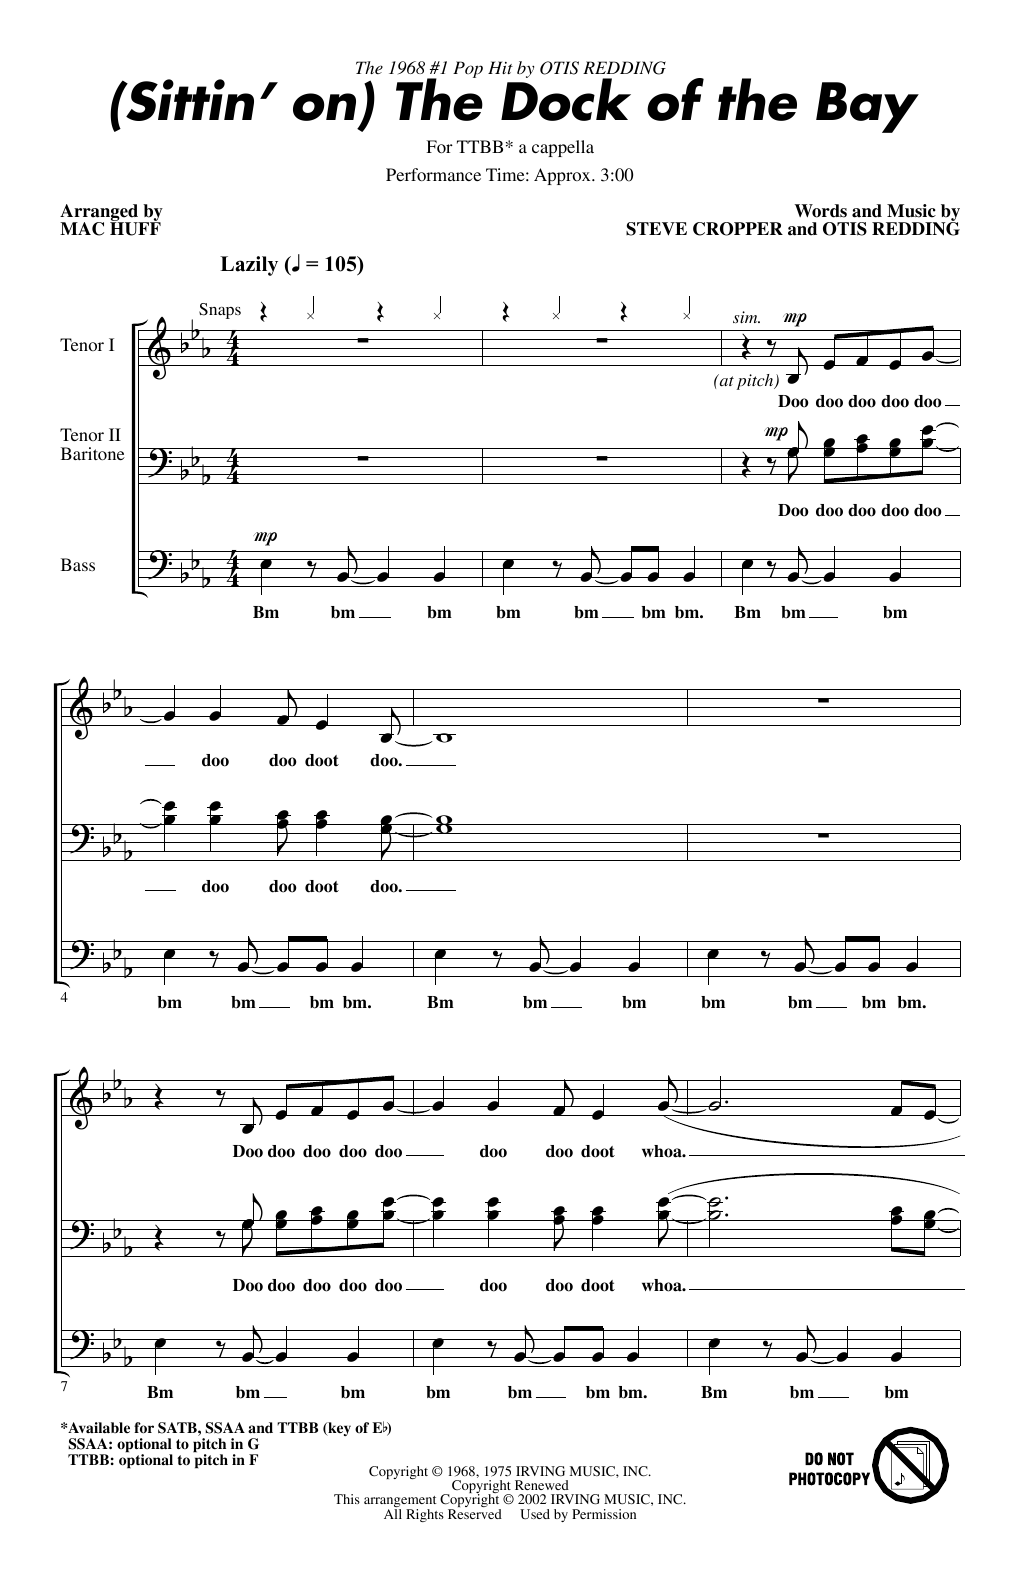 Otis Redding (Sittin' On) The Dock Of The Bay (arr. Mac Huff) Sheet Music Notes & Chords for TTBB Choir - Download or Print PDF